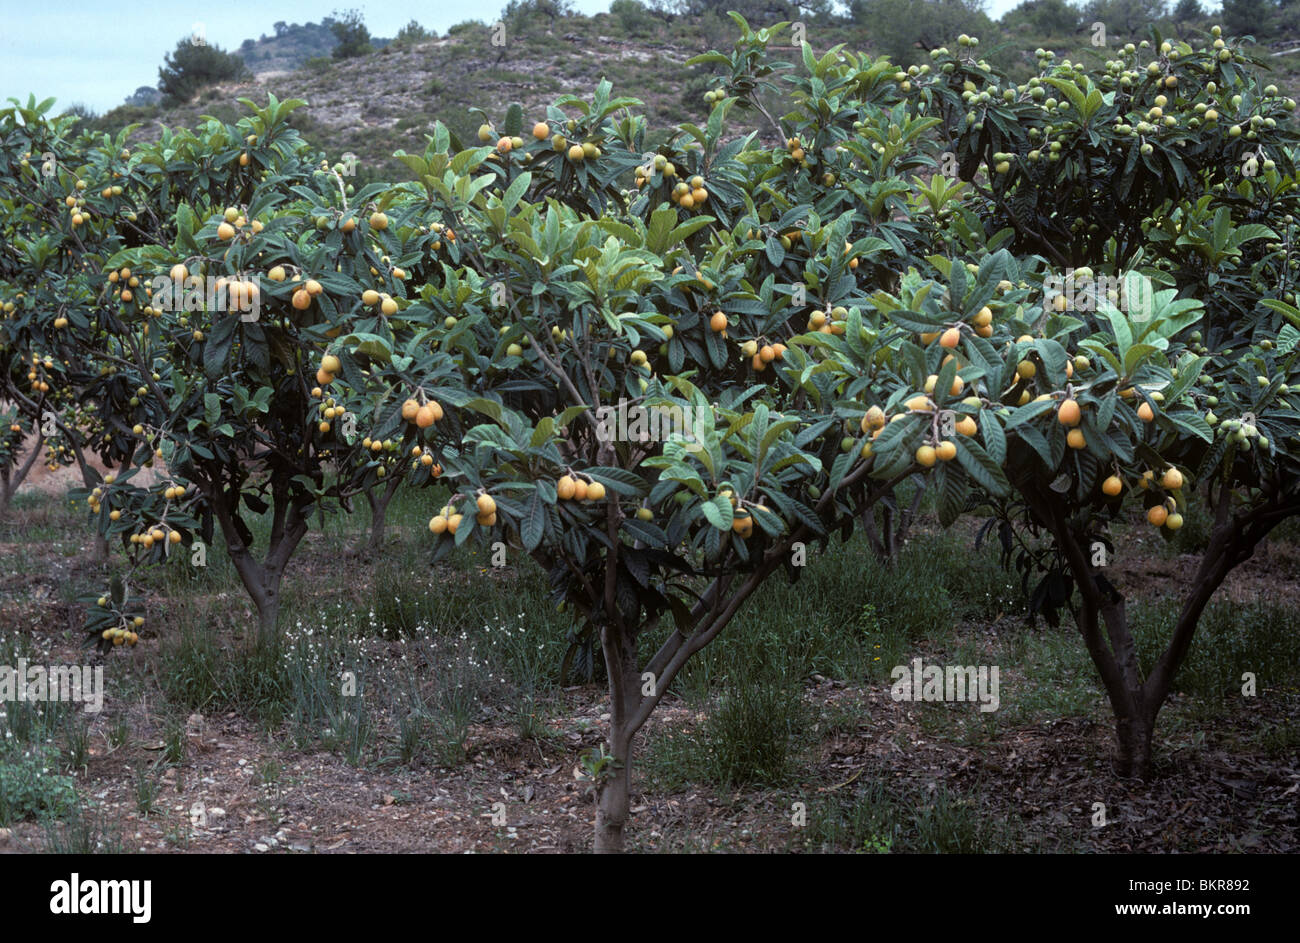 Árbol de nísperos con fruta madura, Valencia, España Foto de stock